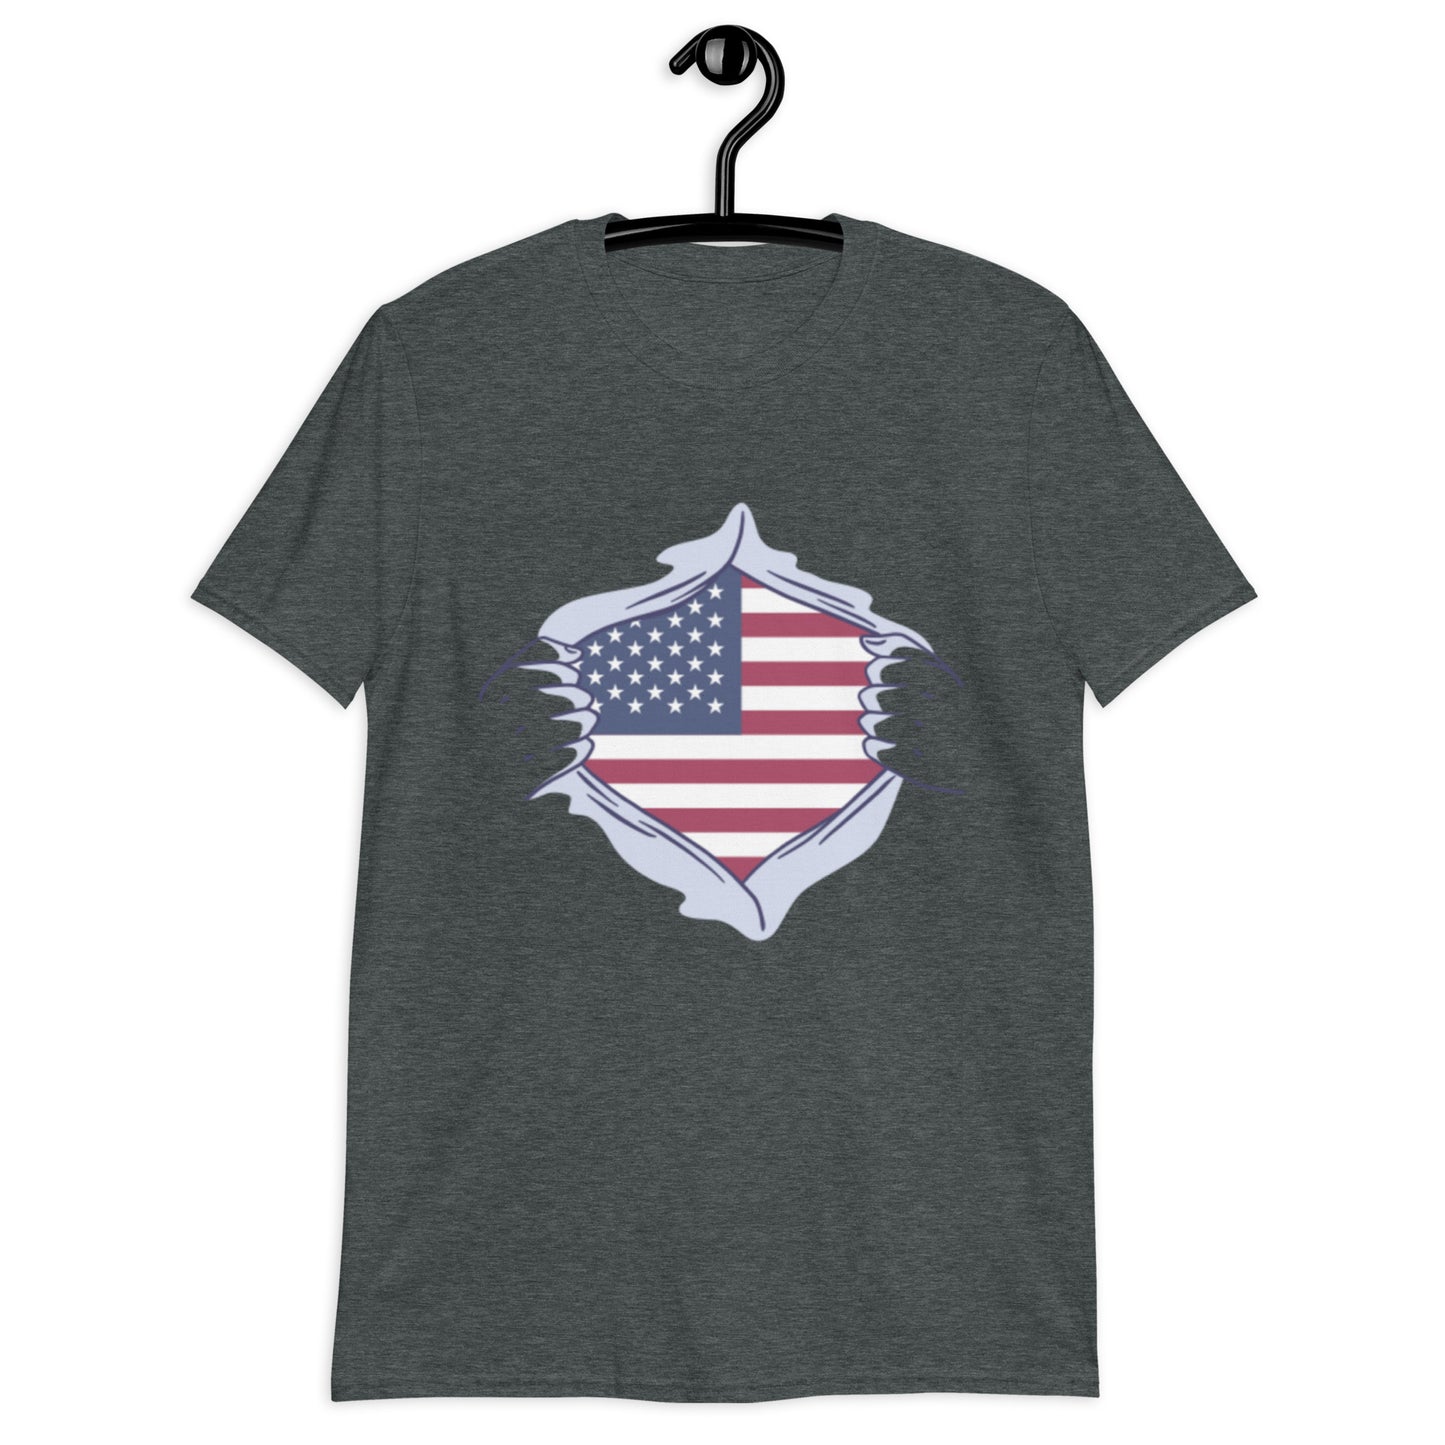 America First Shirt / Save America Shirt / 4th July Day T-Shirt